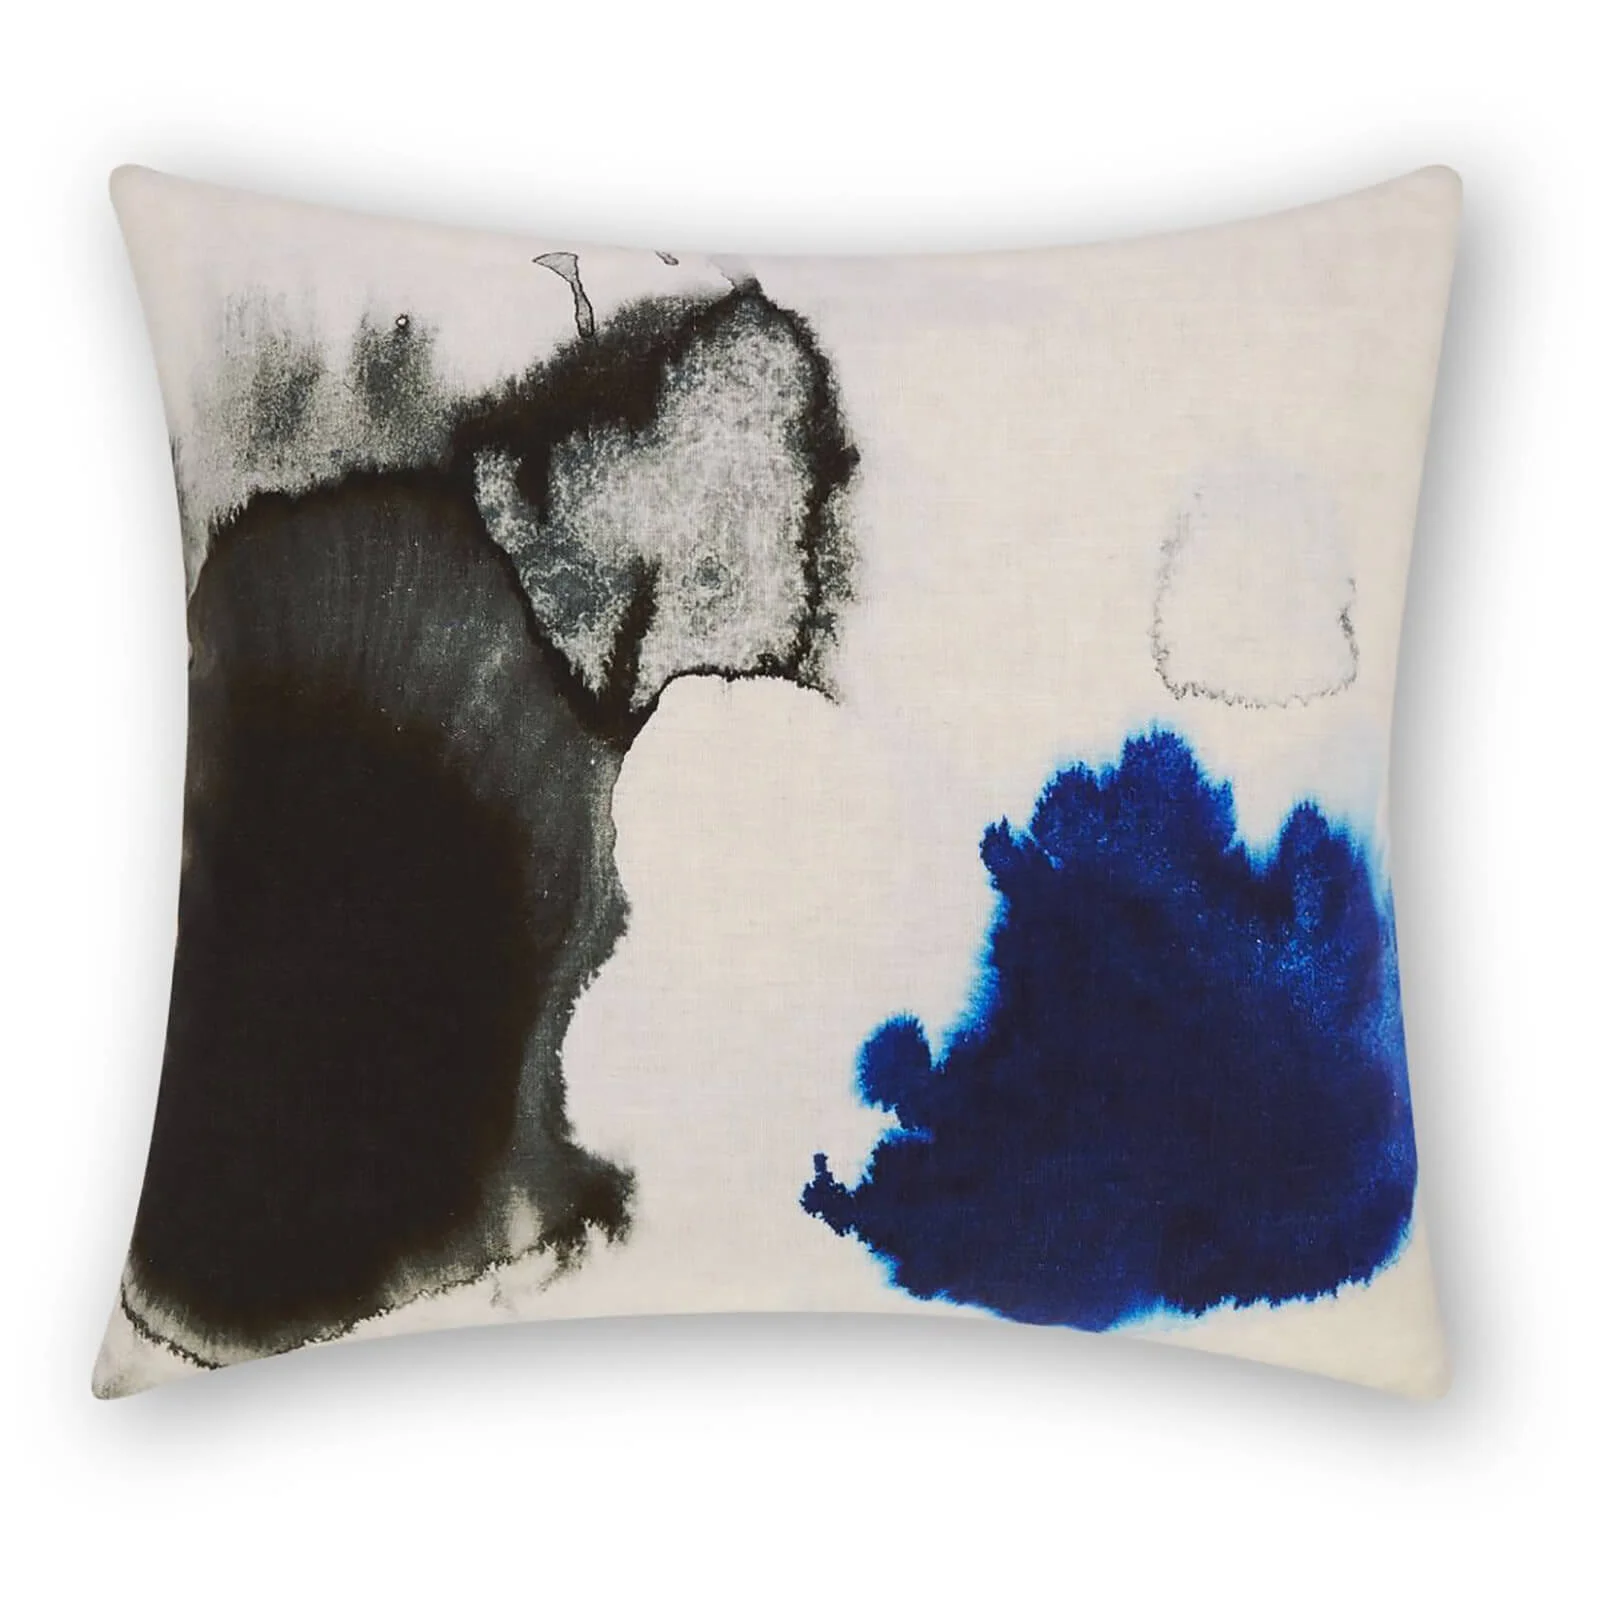 Tom Dixon Blot Cushion - 60 x 60cm Image 1